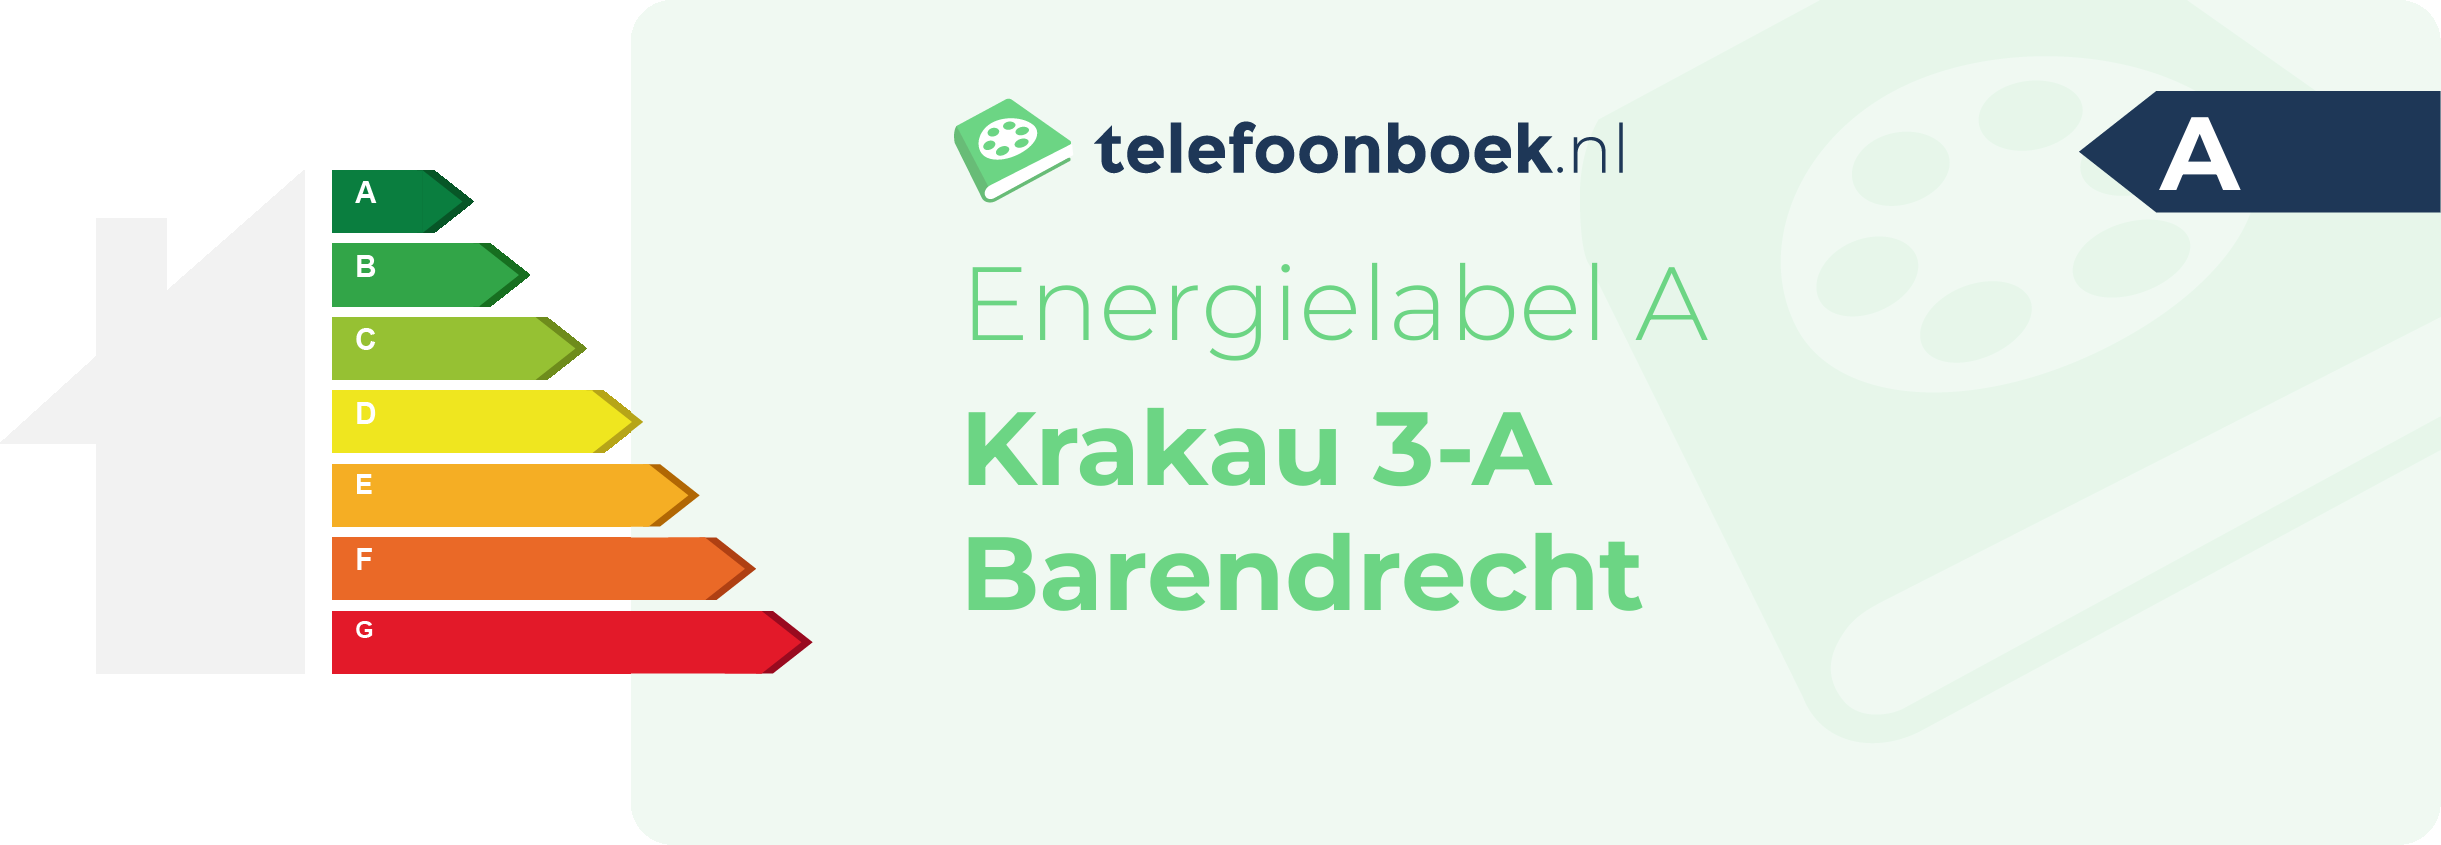 Energielabel Krakau 3-A Barendrecht